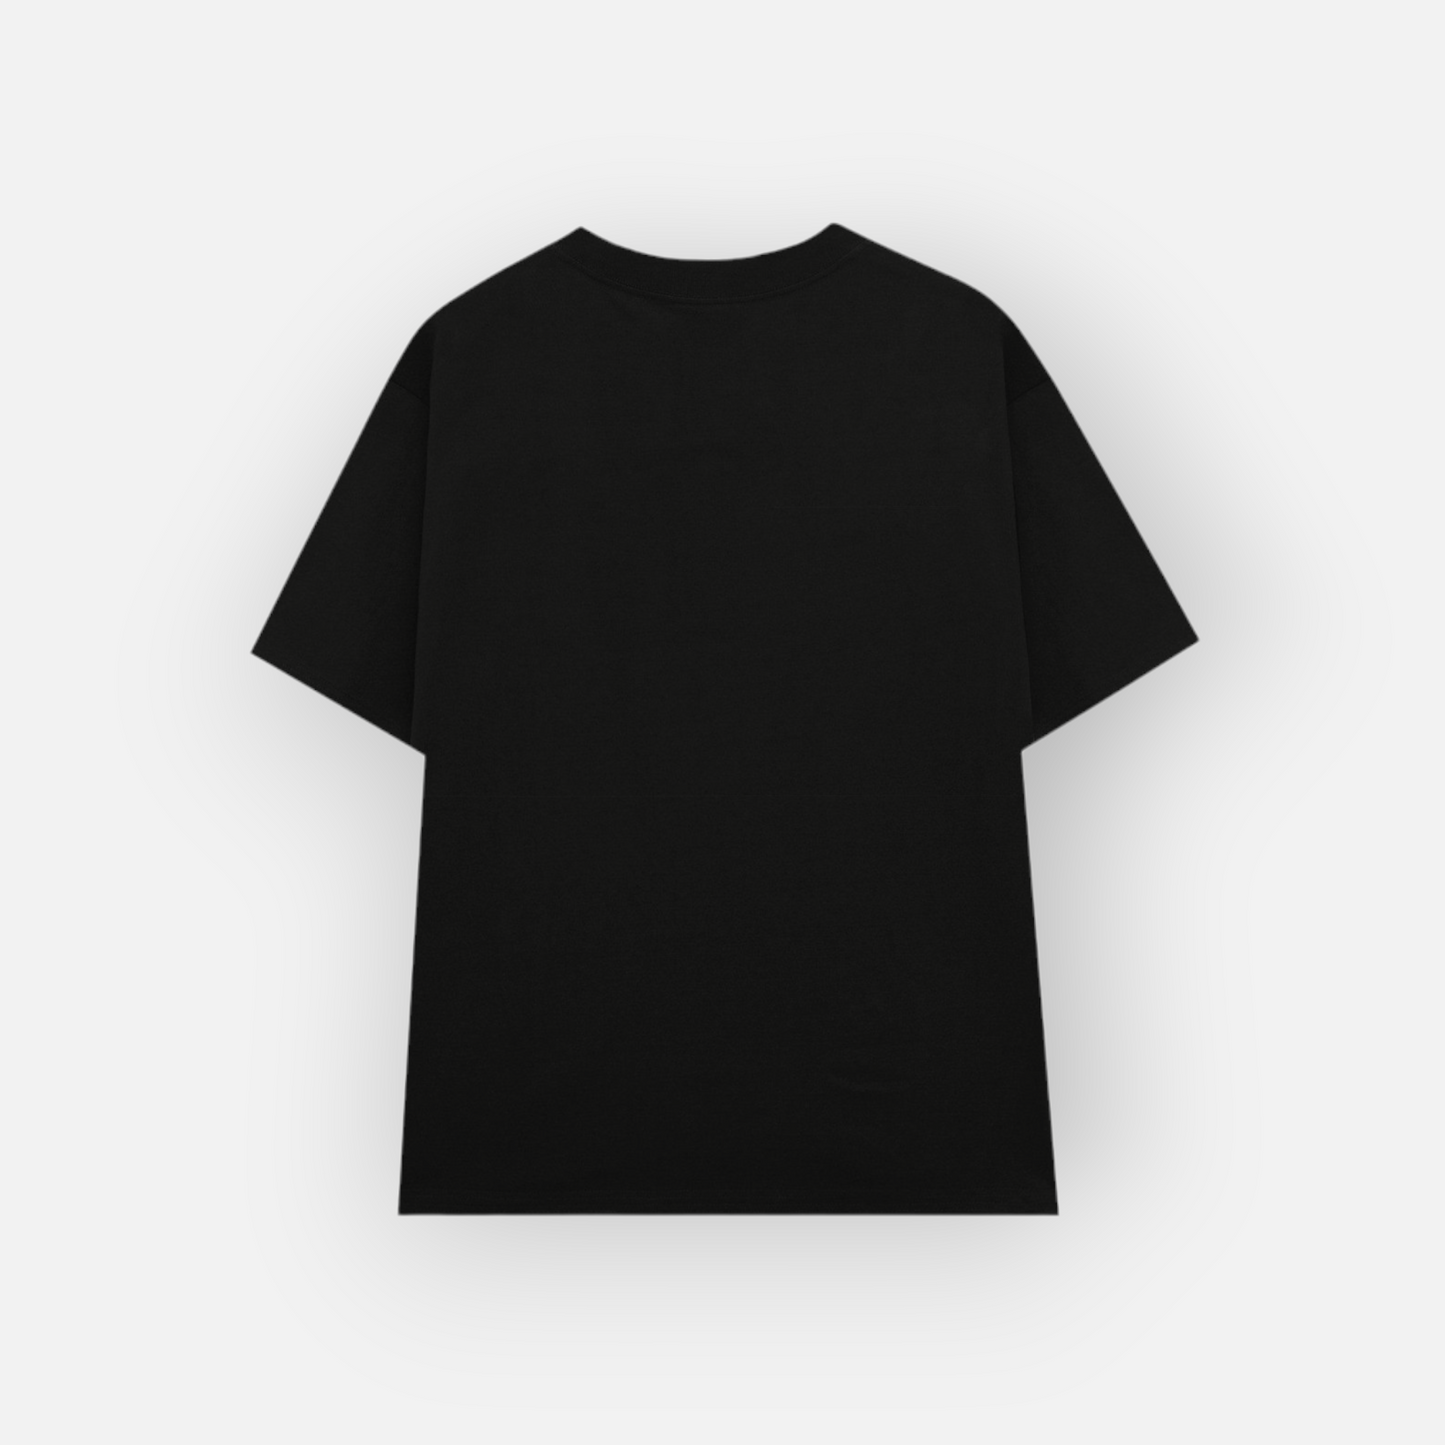 Evanescent Puff Oversized T-Shirt (Obsidian Noir)